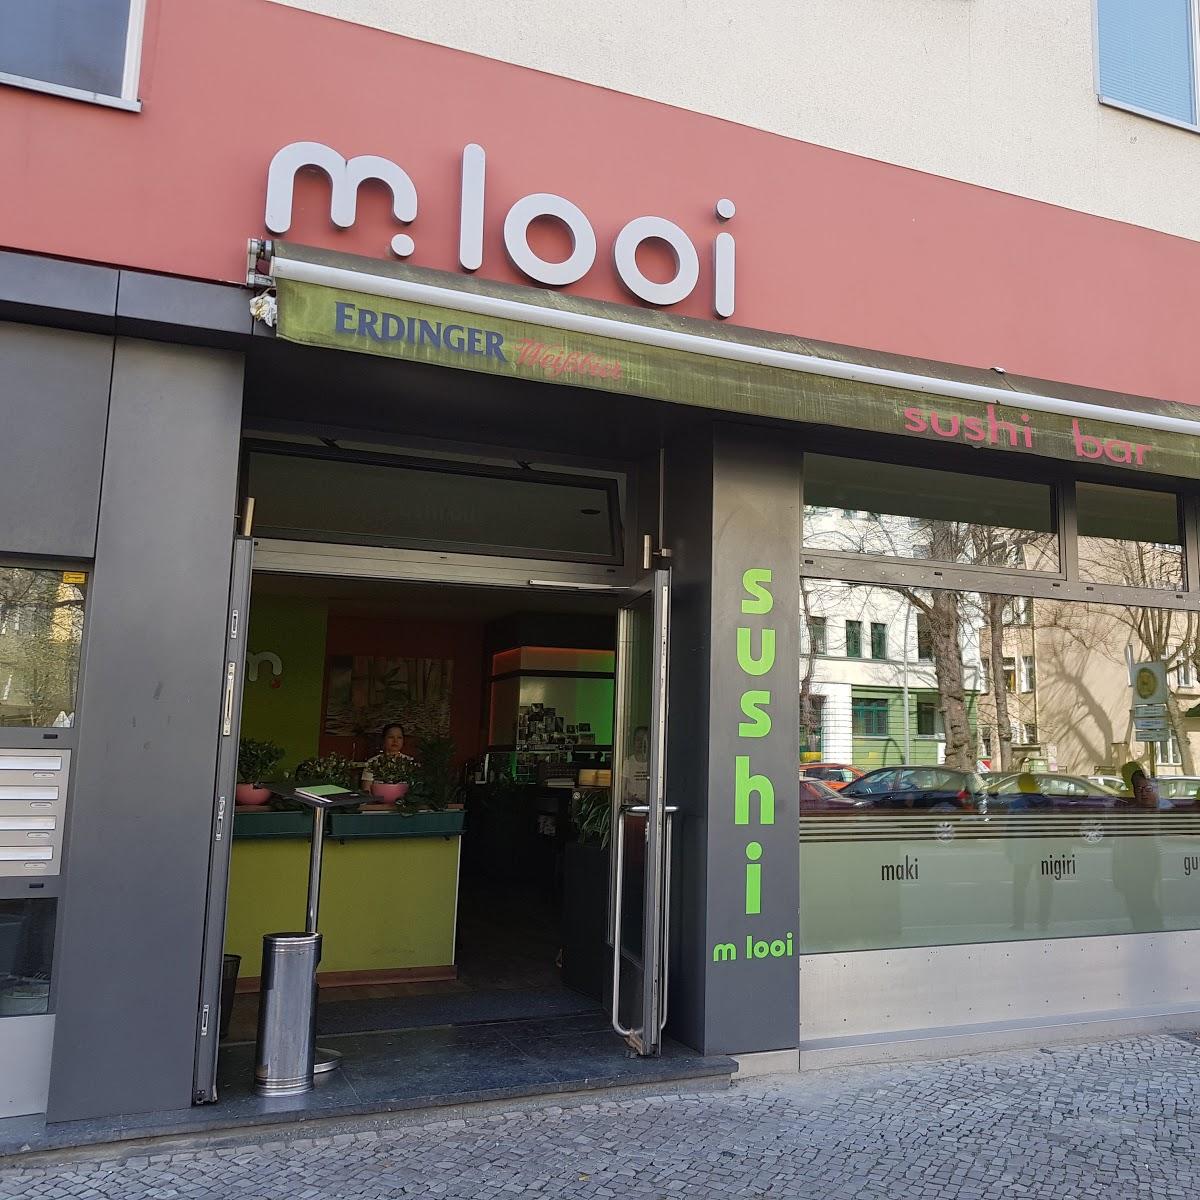 Restaurant "Mateo-Looi Sushi Restaurant" in  Berlin